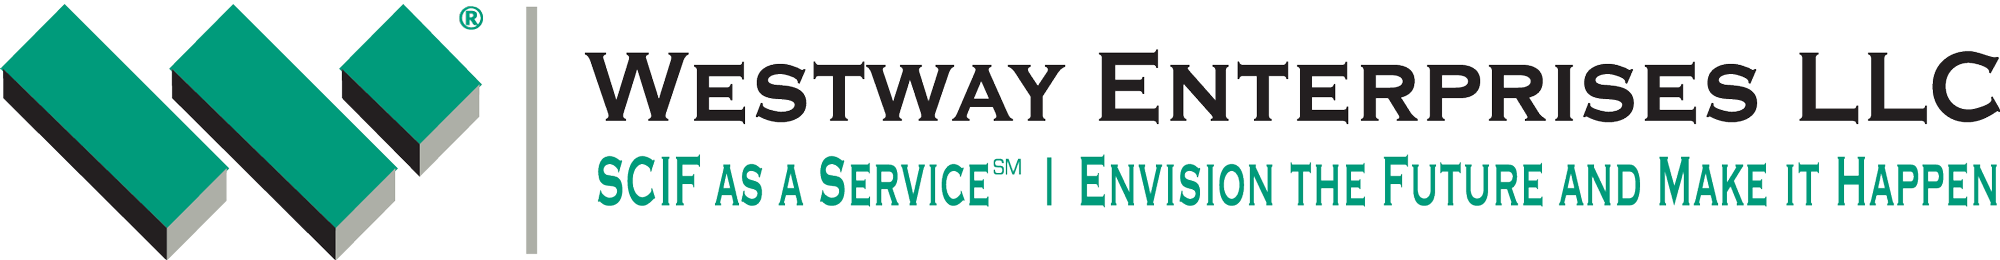 Westway Enterprises LLC